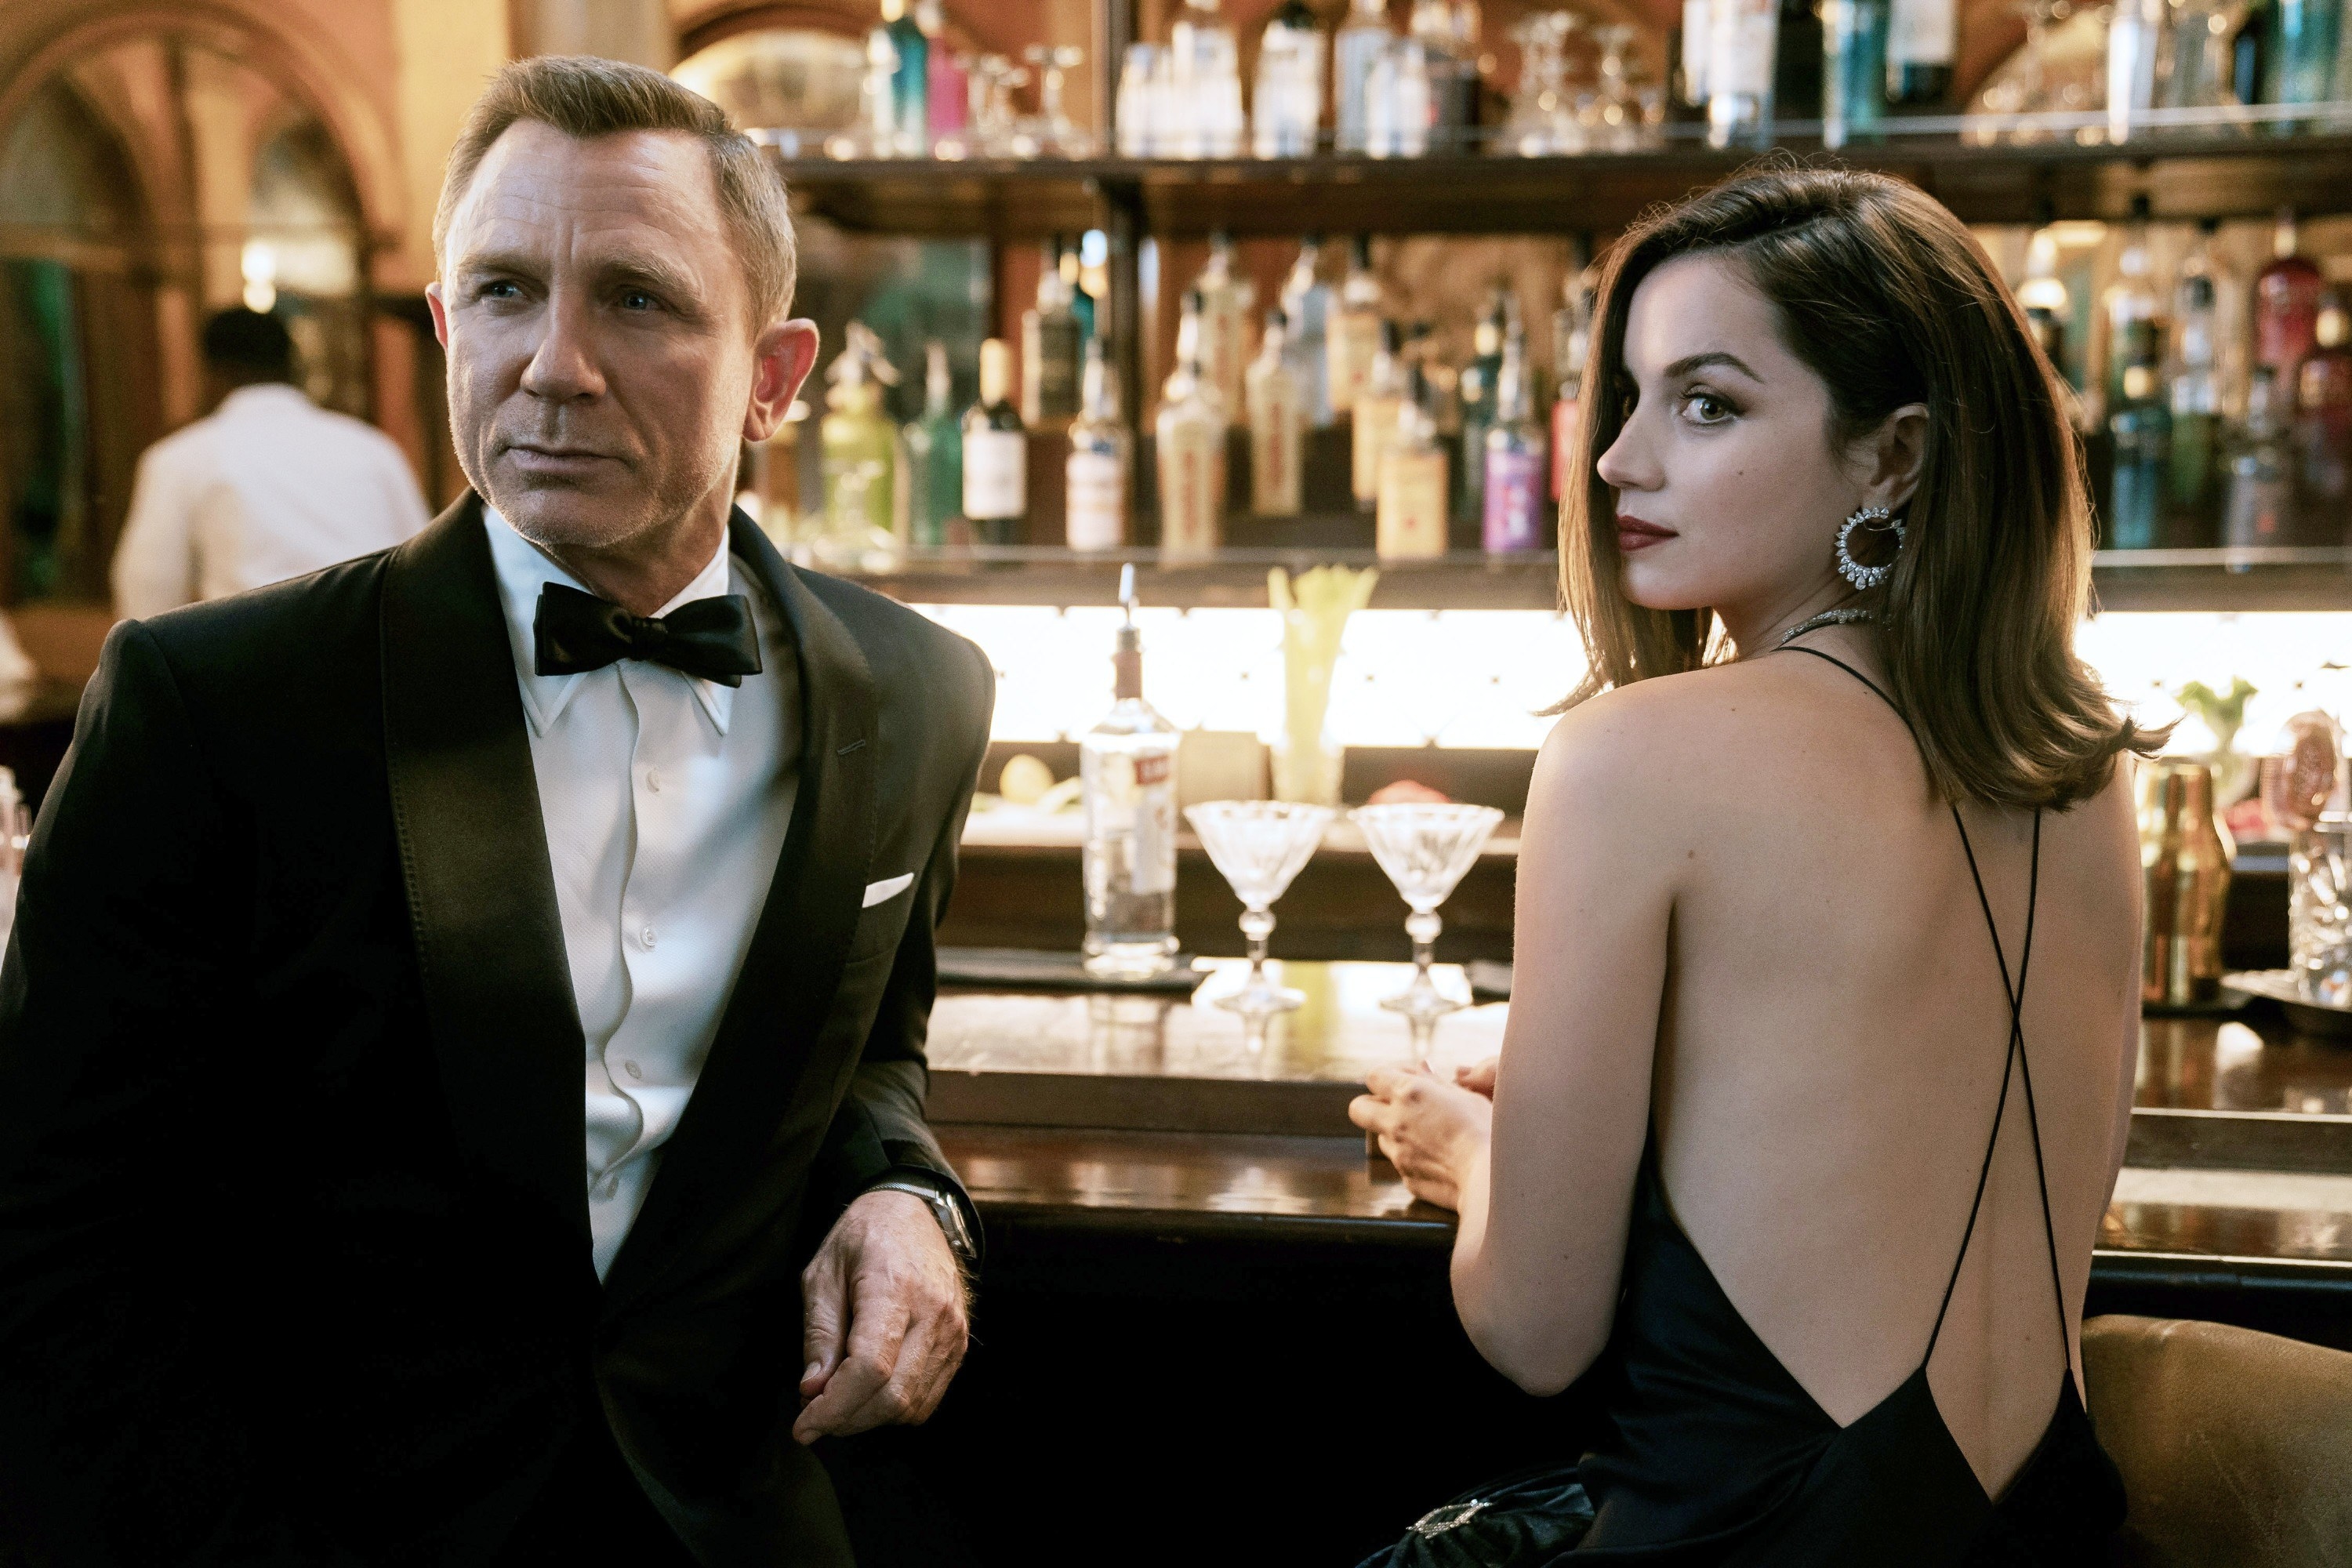 Daniel Craig and Ana de Armas stand together at a bar